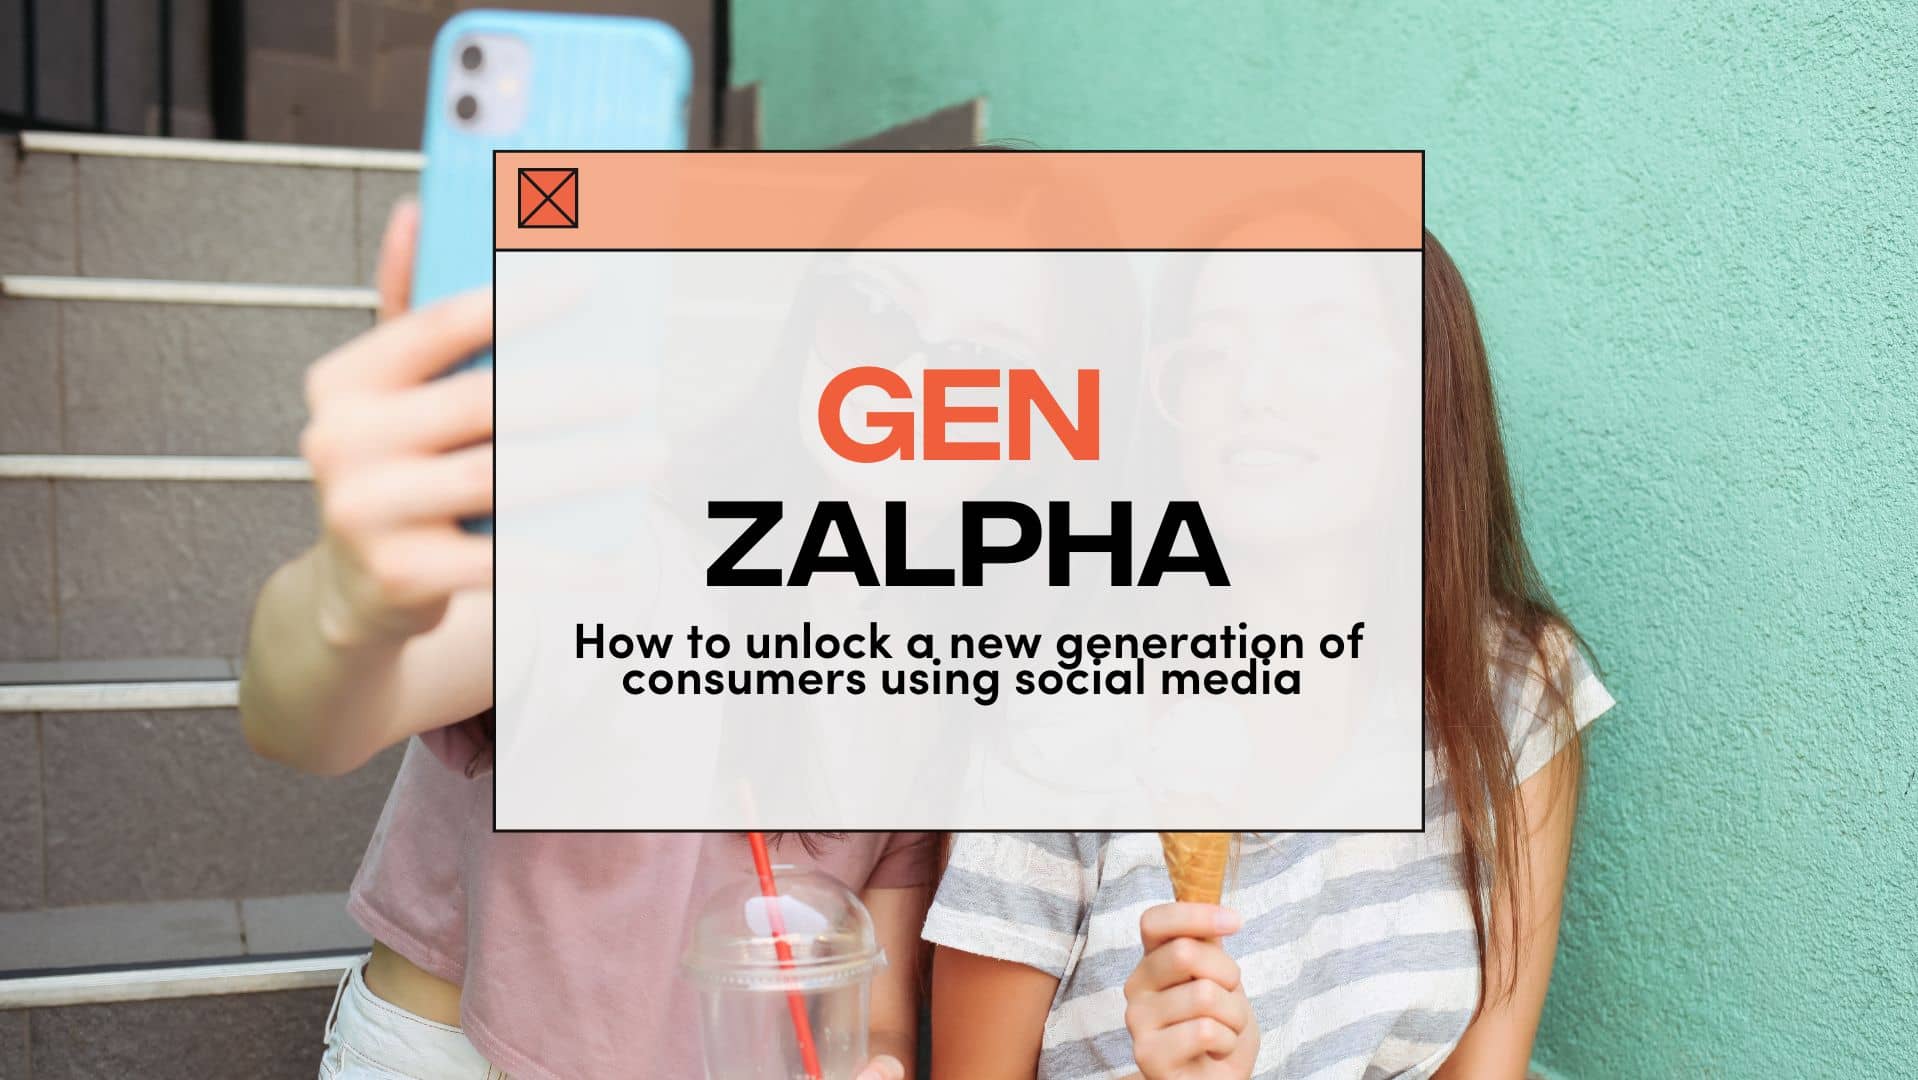 Gen Zalpha - How to unlock a new generation of consumers using social media